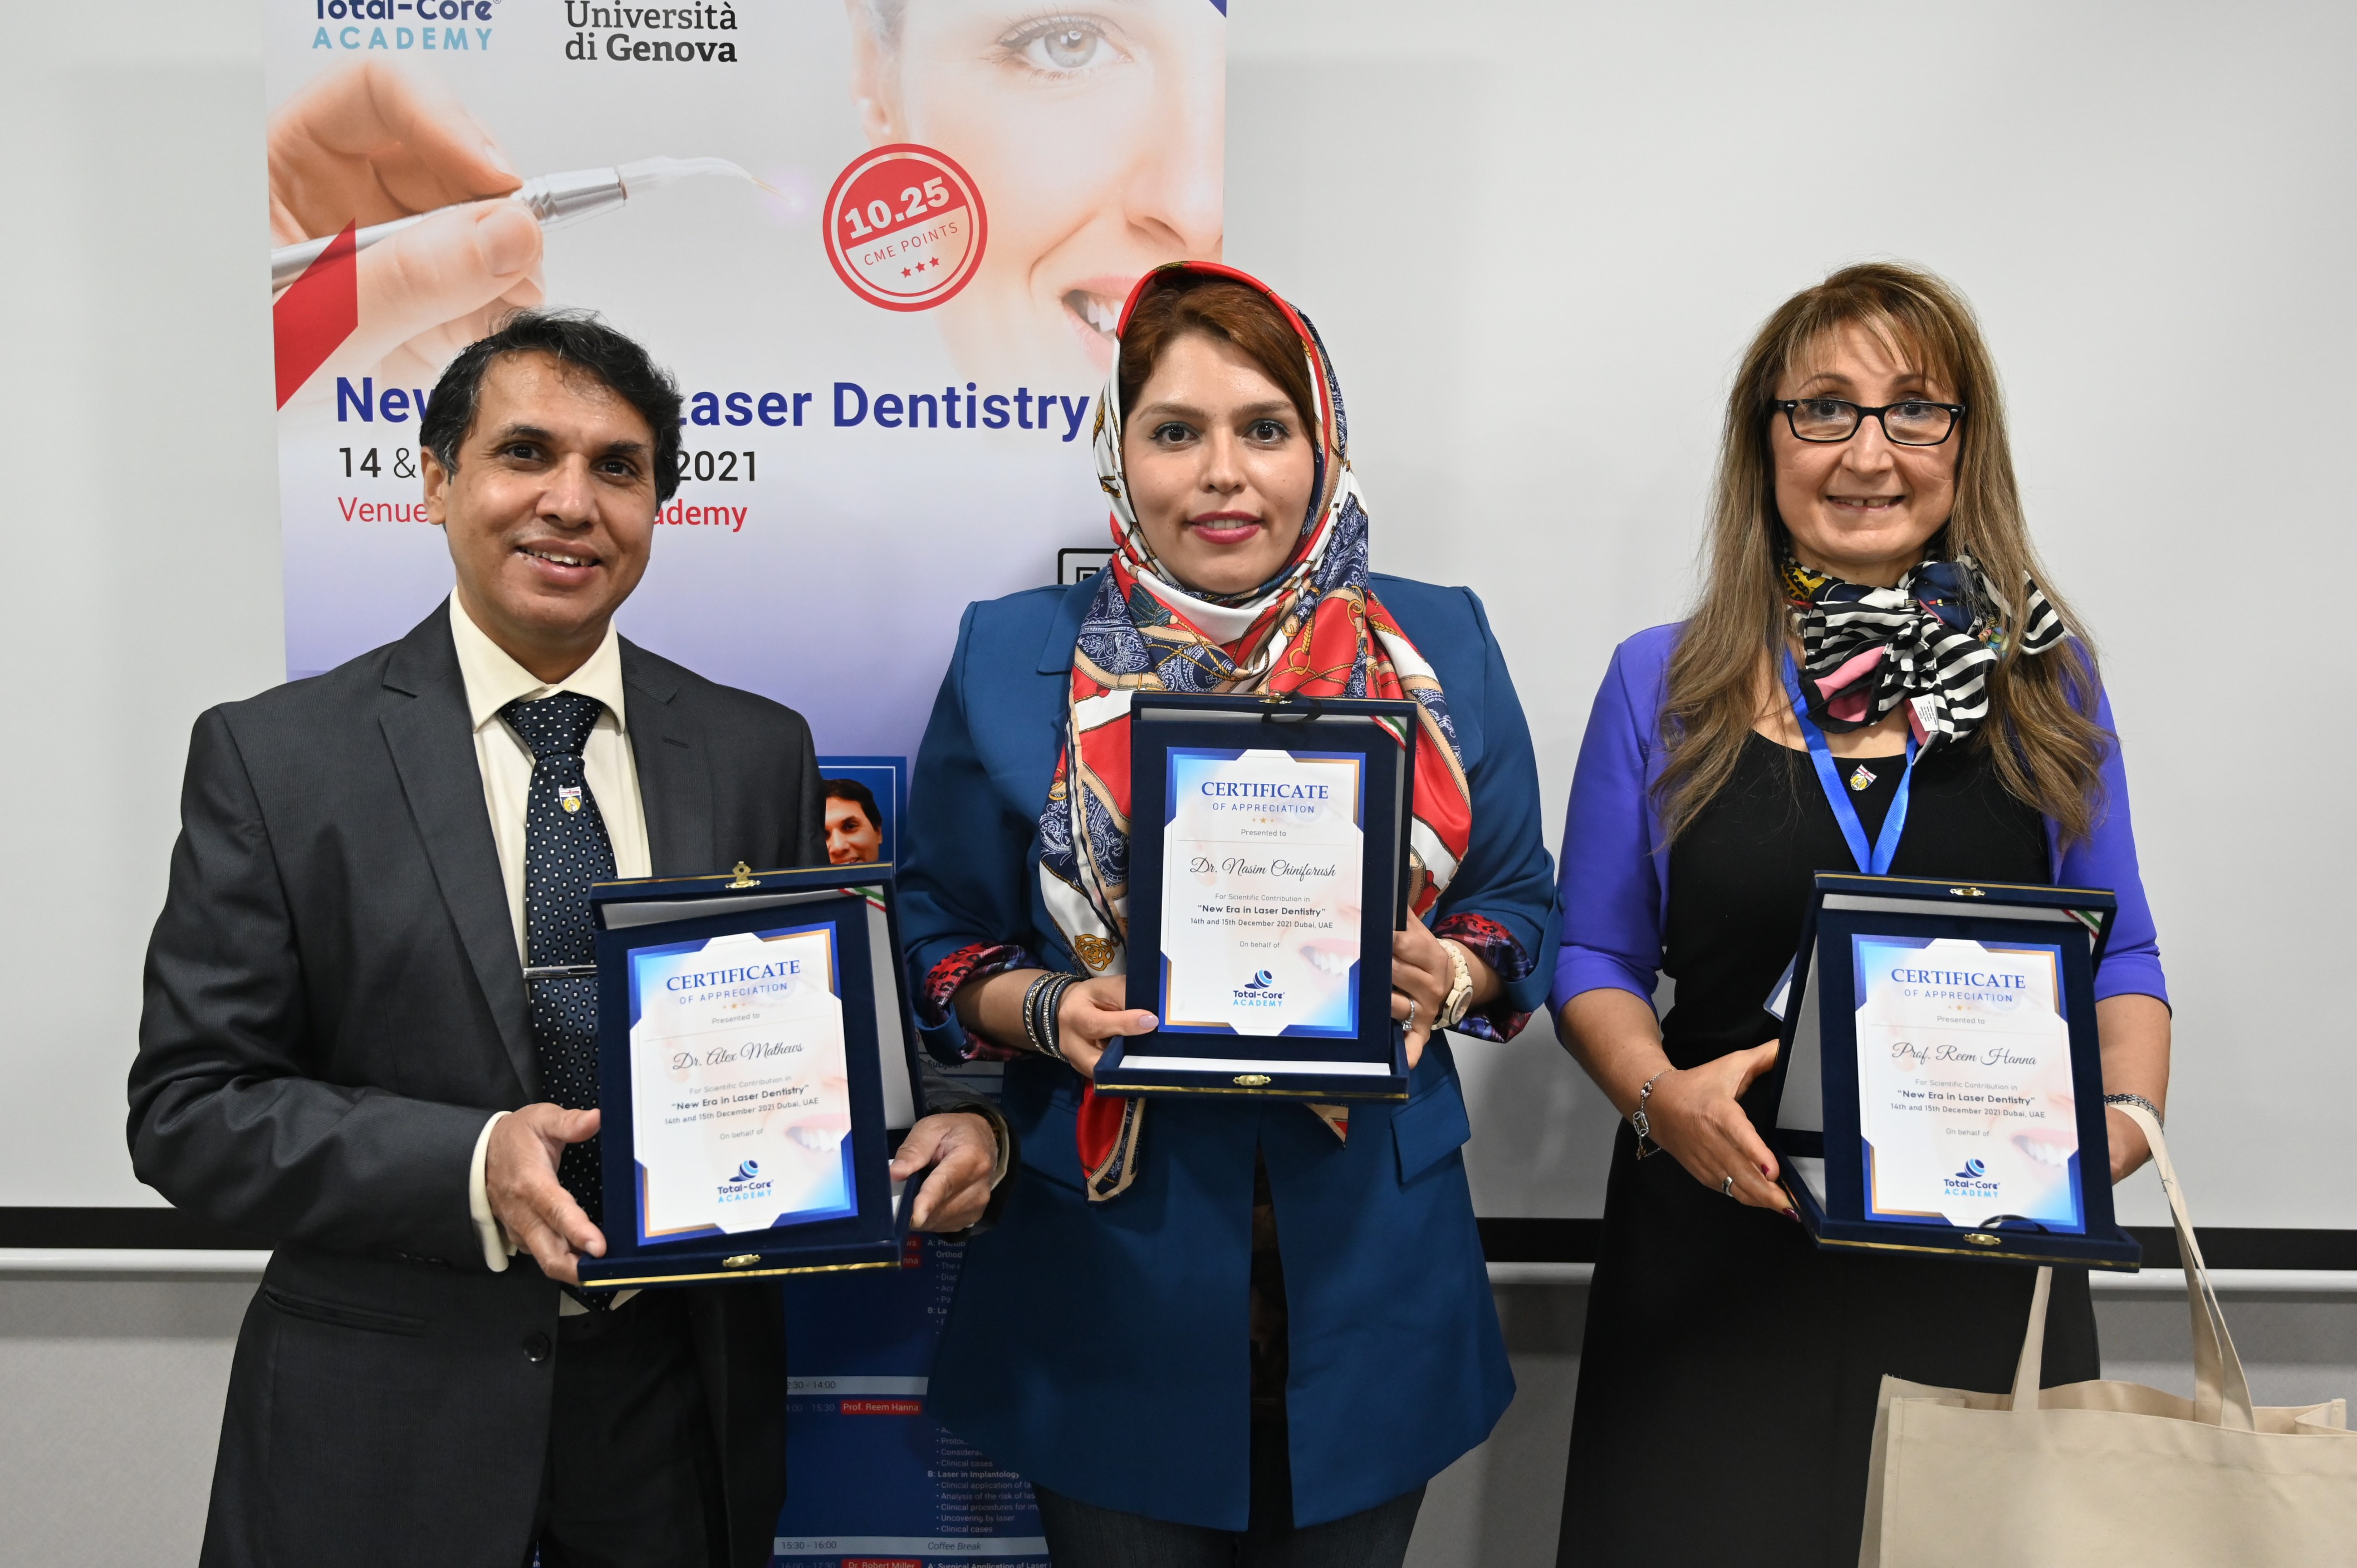 New Era in Laser Dentistry 2021